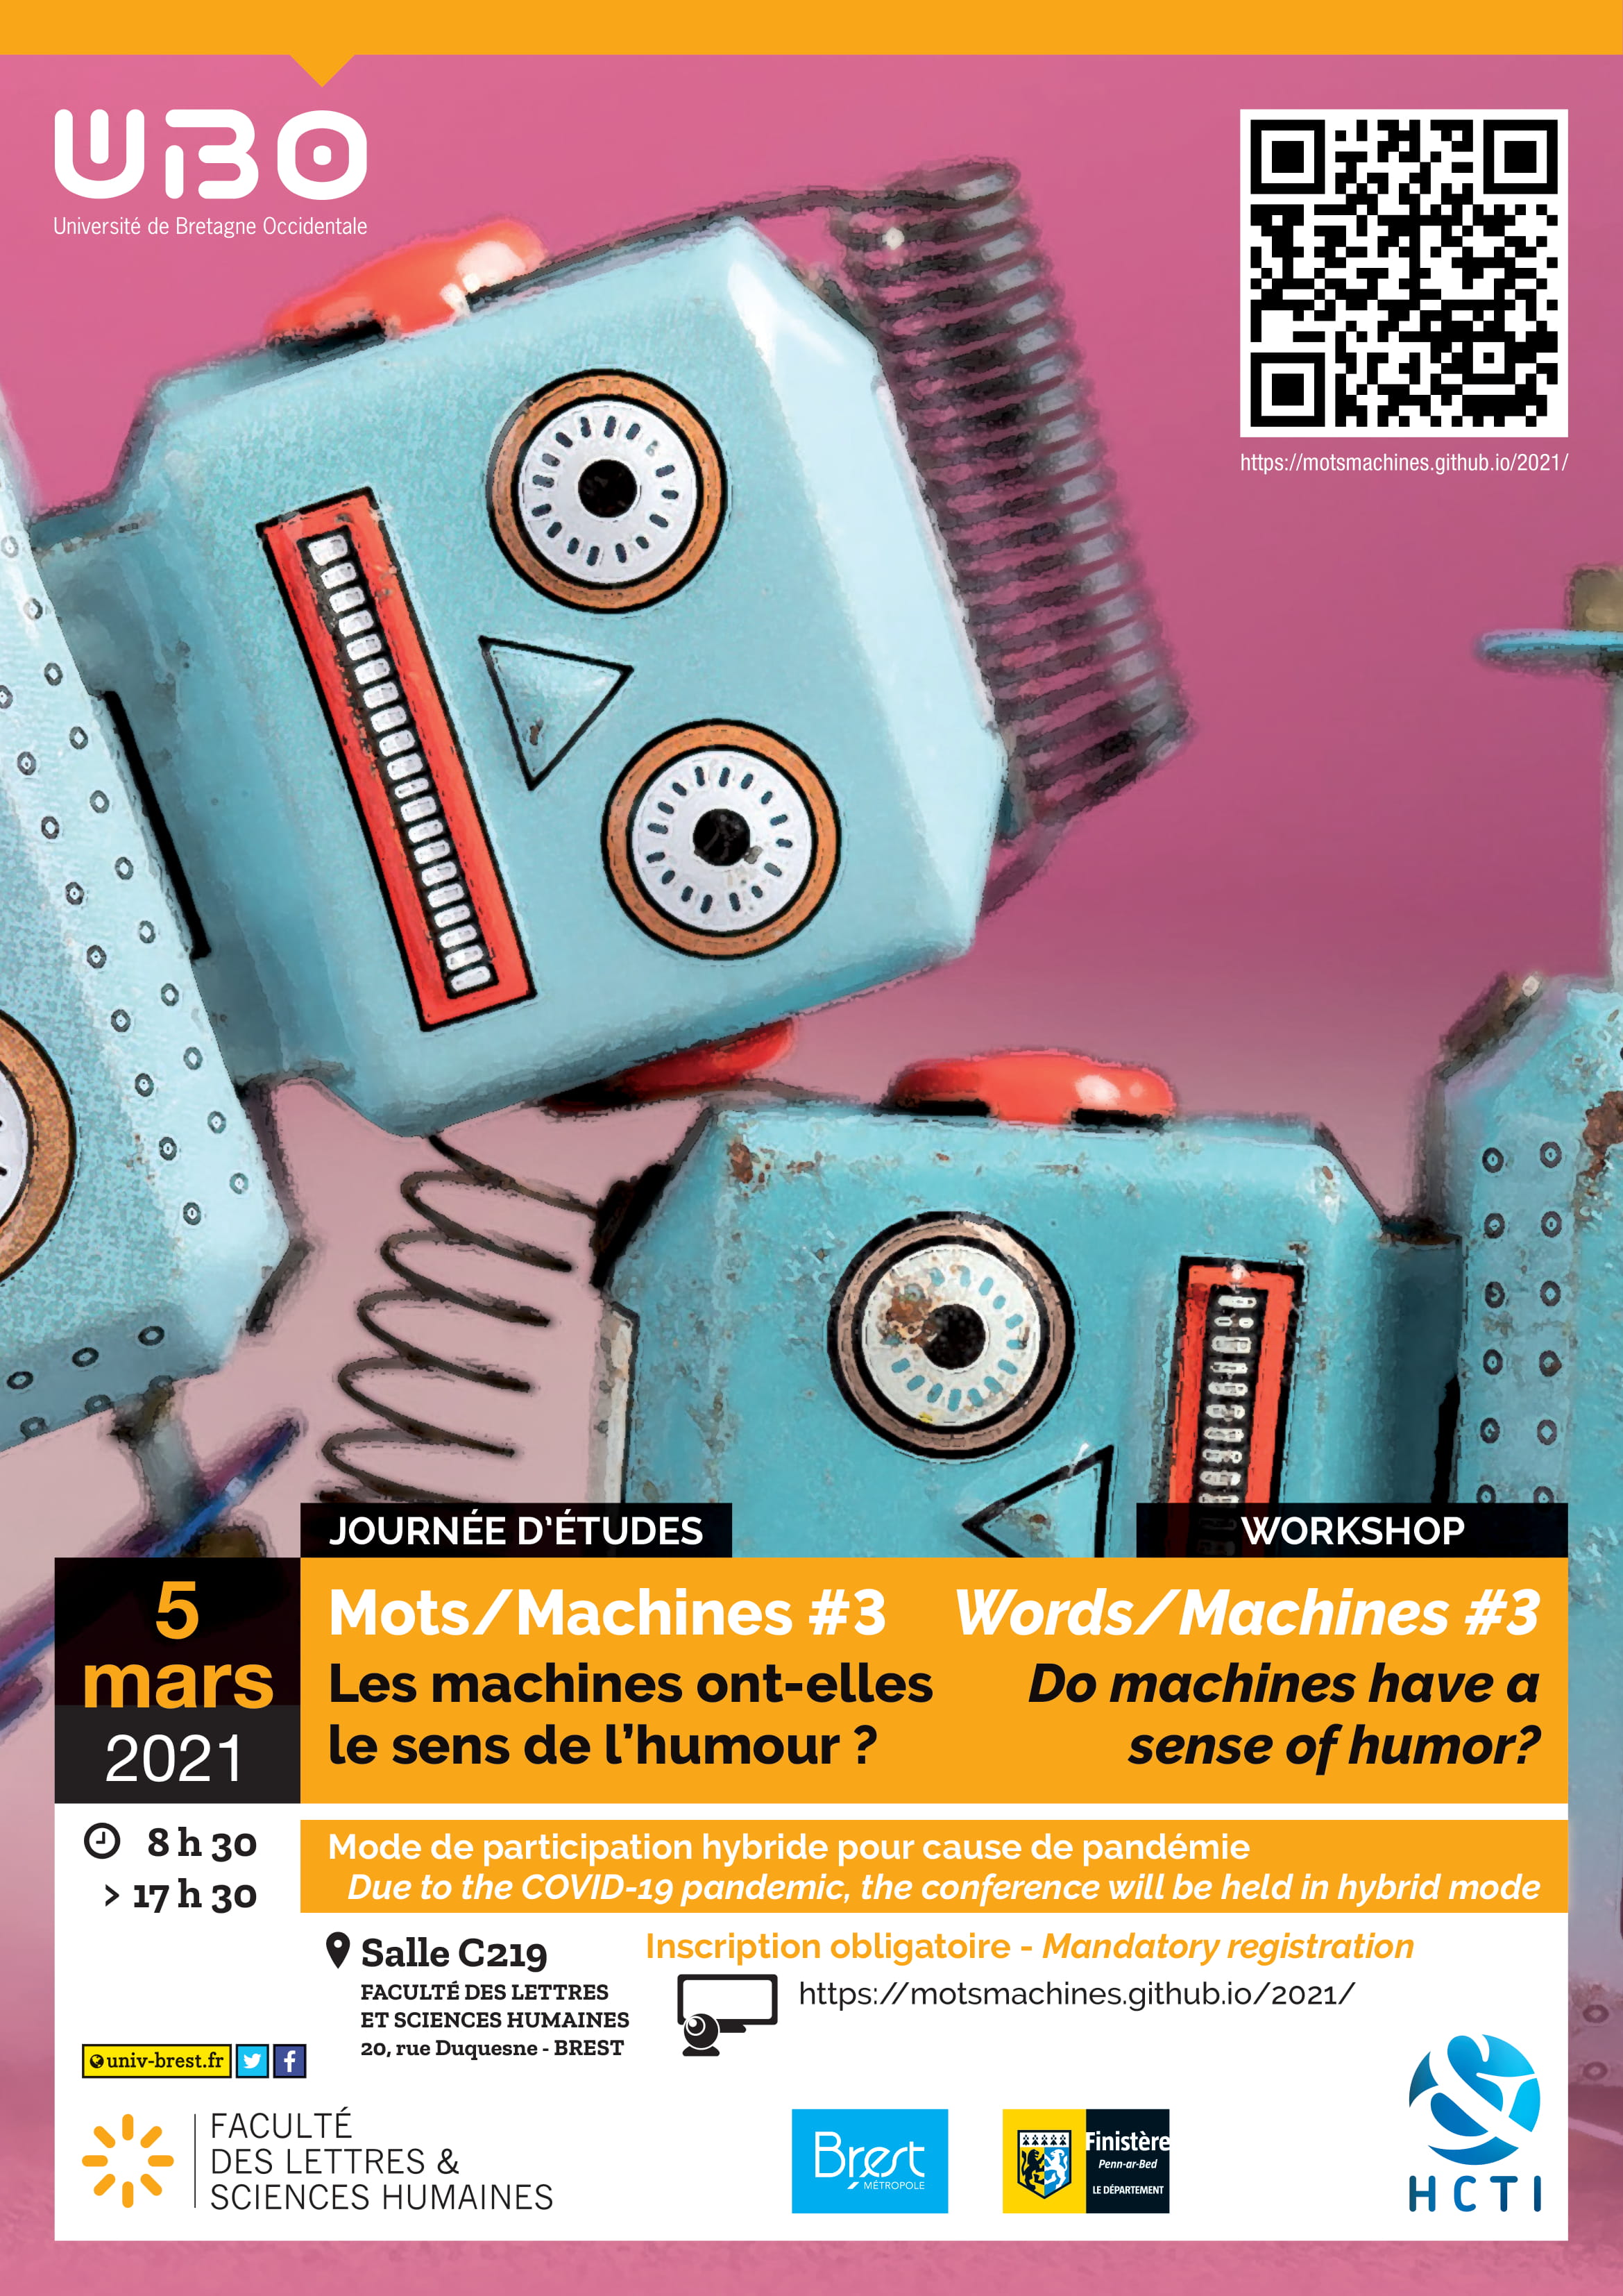 Mots/Machines #3